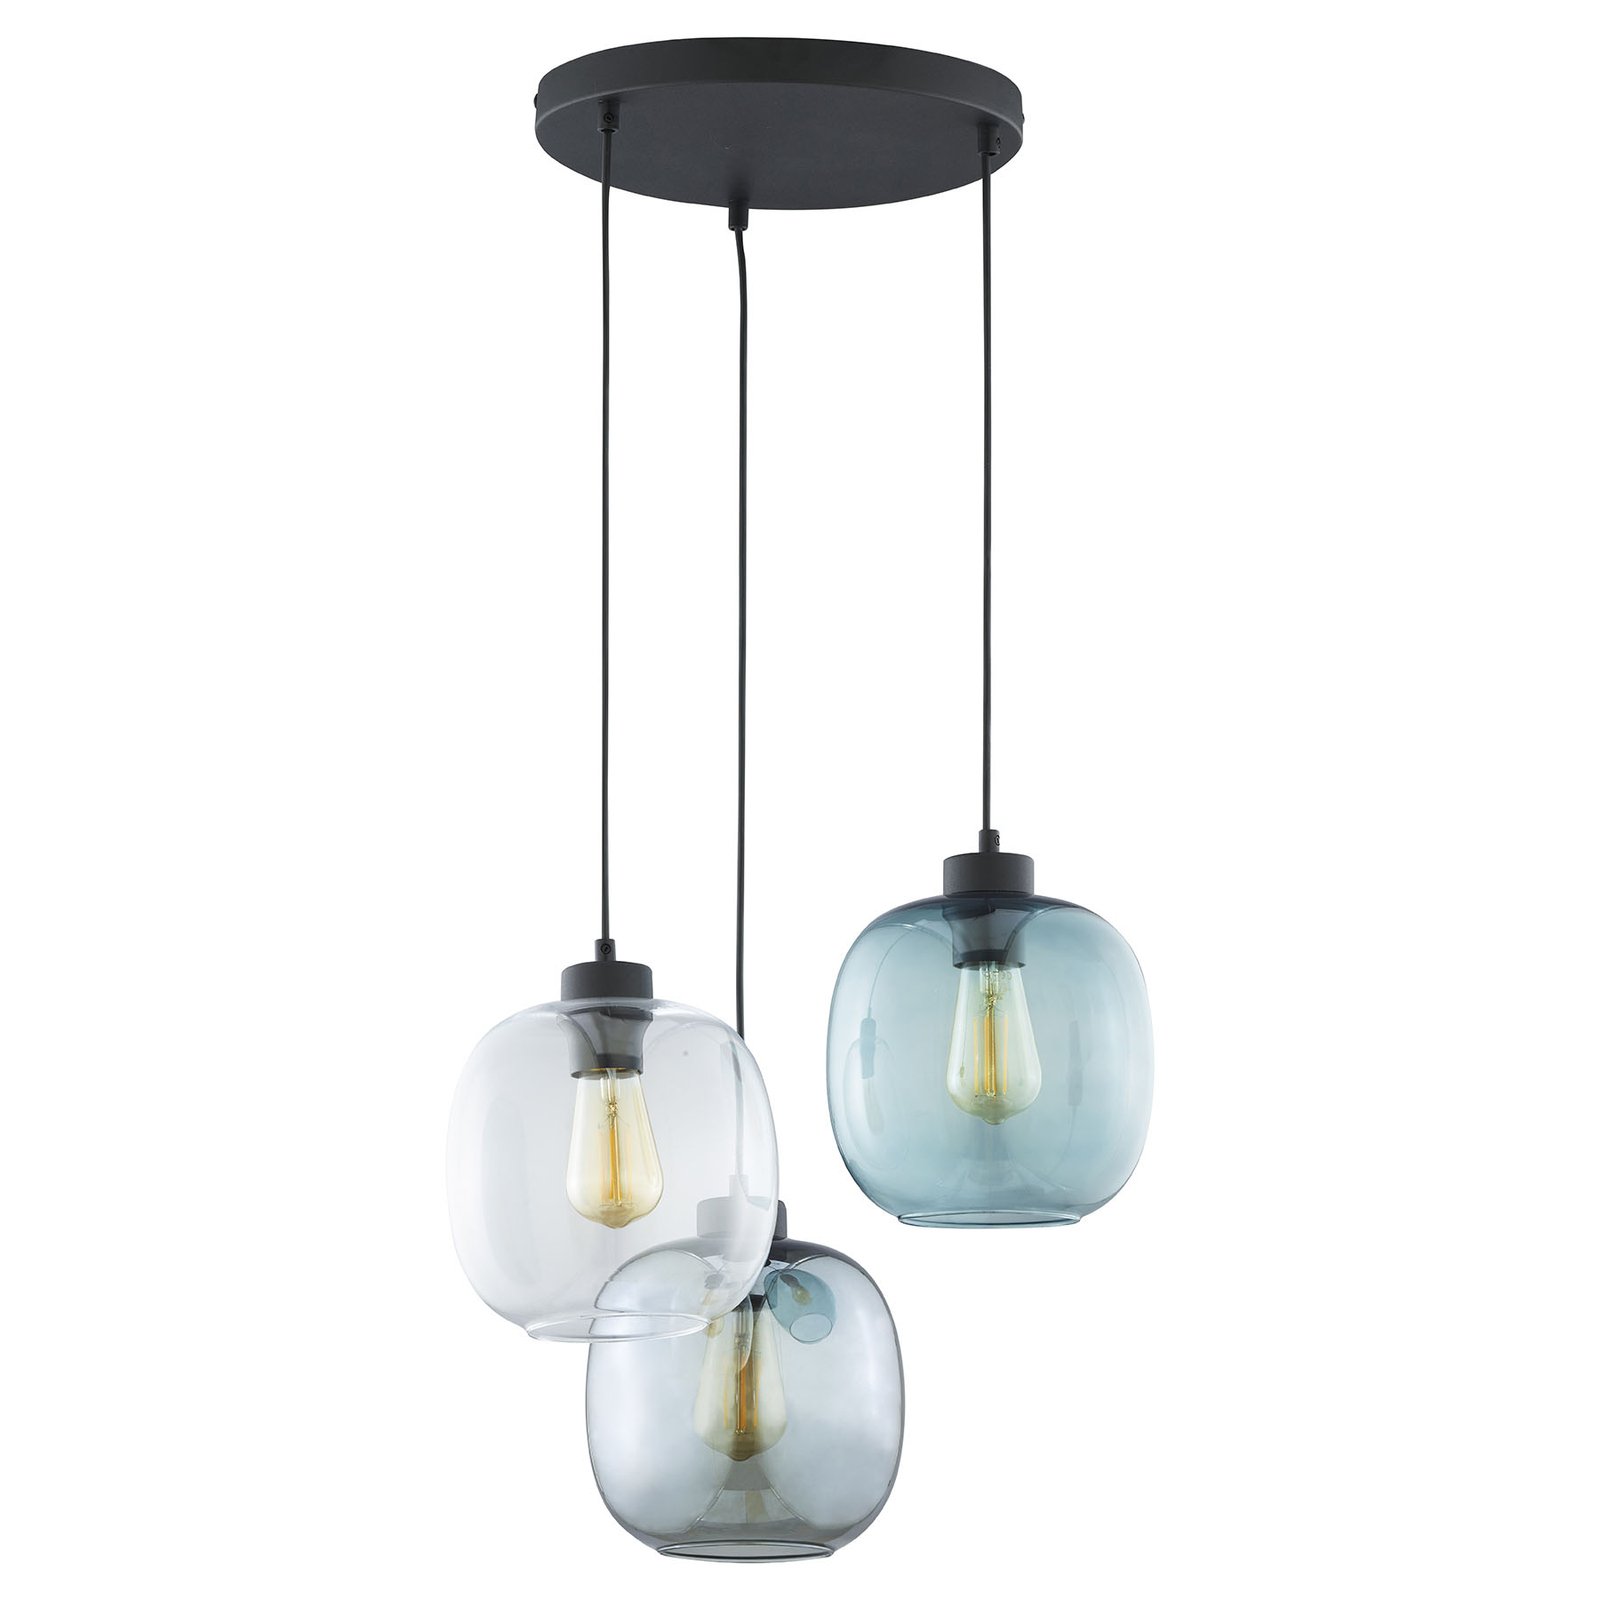 Elio hængelampe, 3 lyskilder, blå, klar, grå